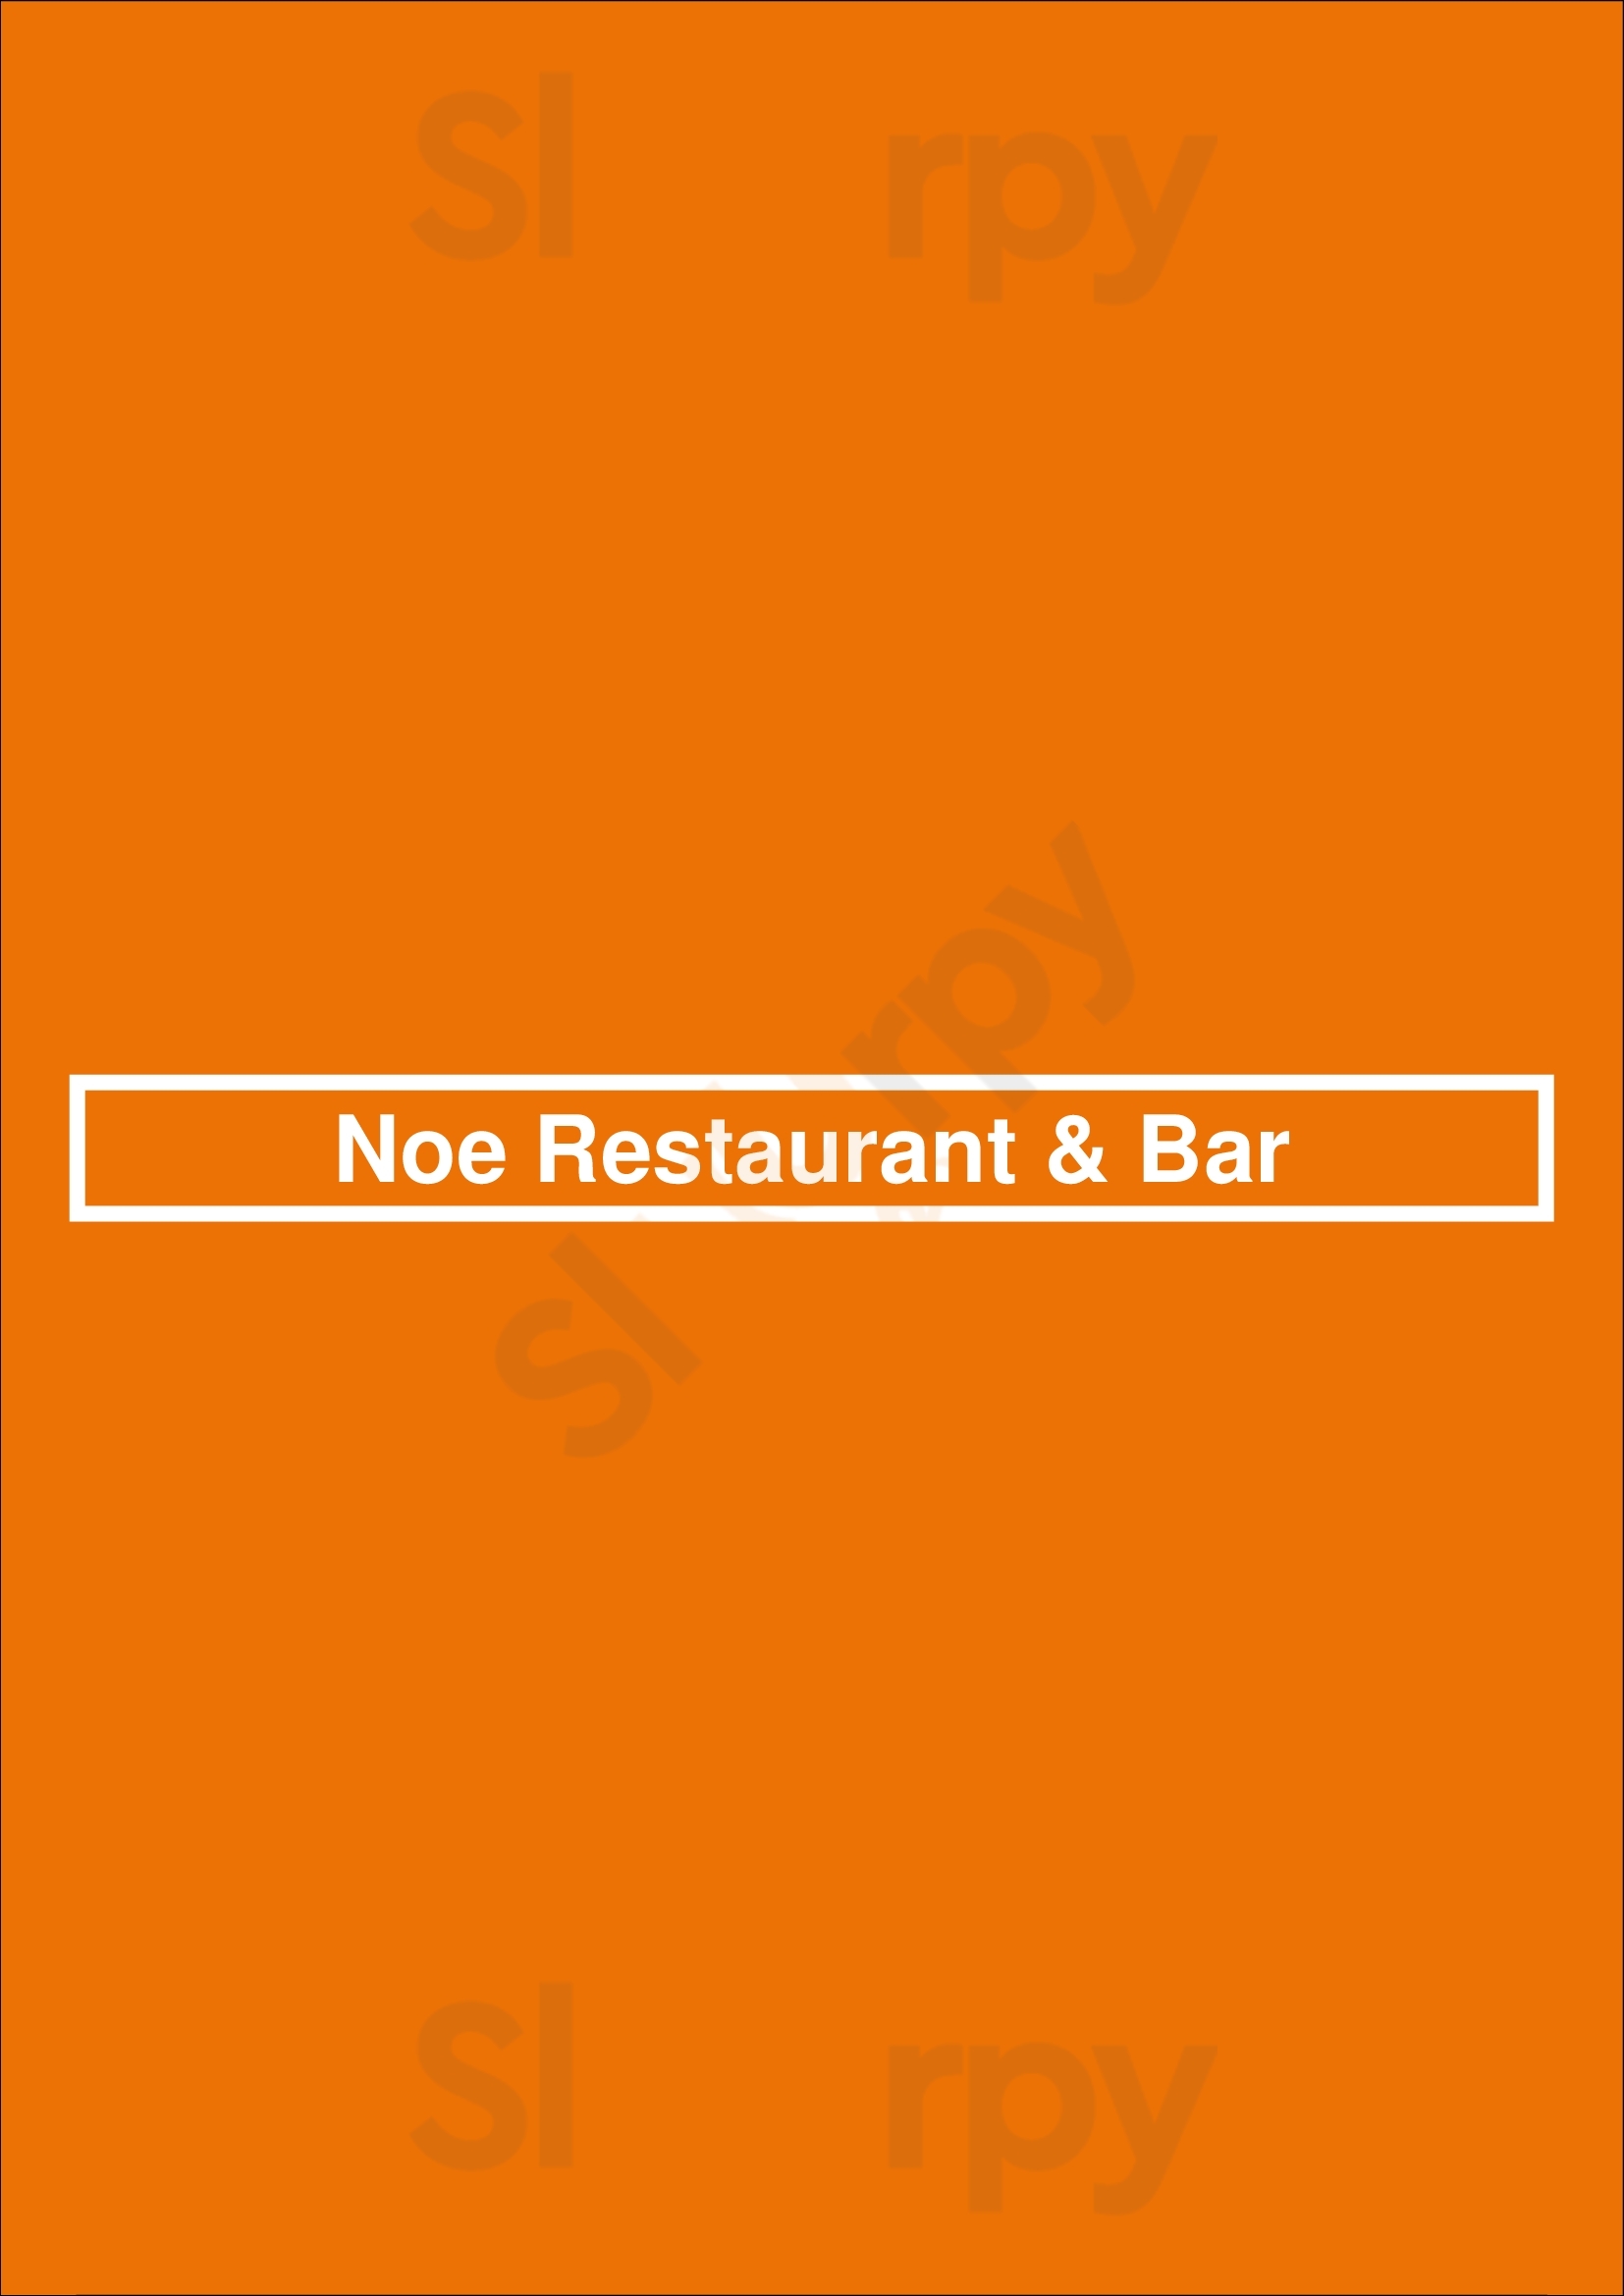 Noe Restaurant & Bar Los Angeles Menu - 1